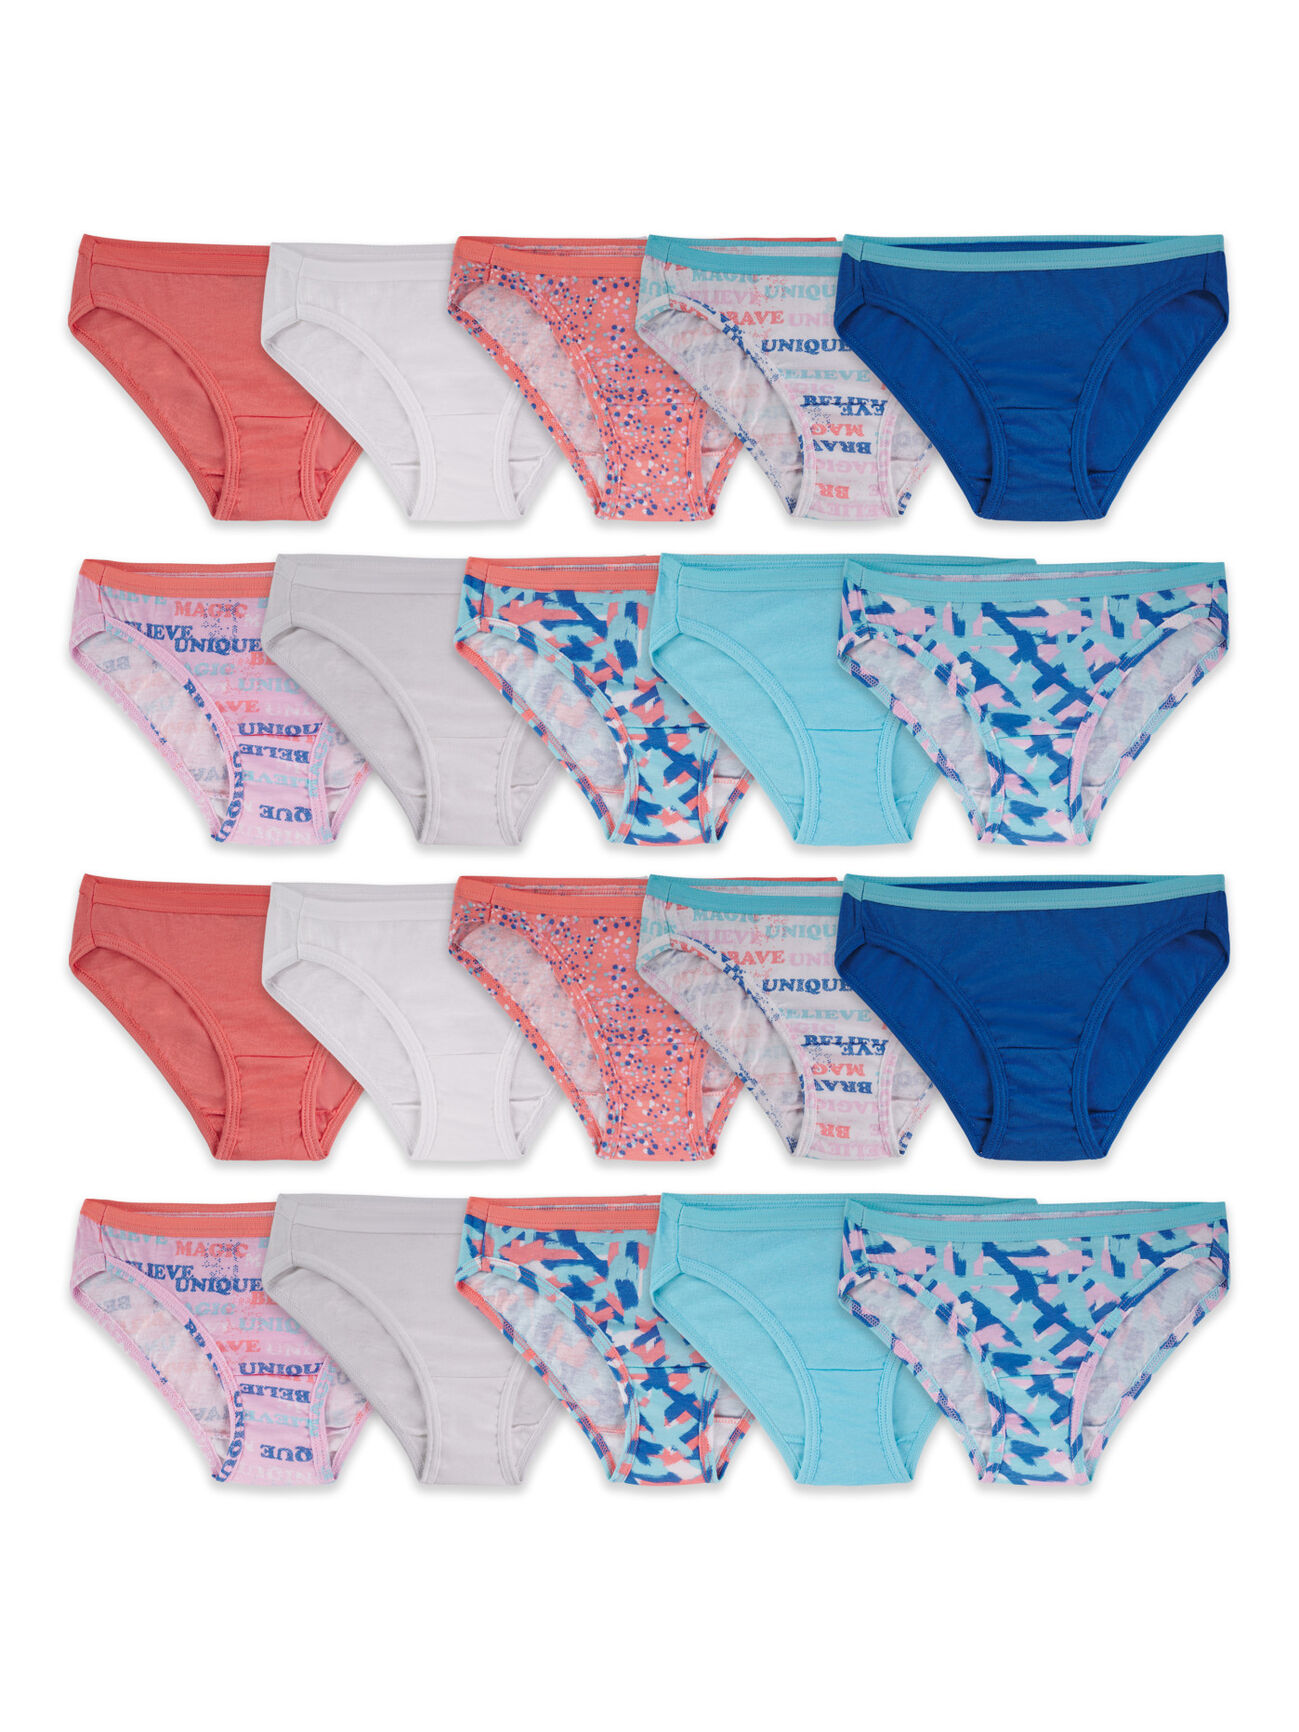 Buy Fruit of the Loom Women's Tag Free Cotton Bikini Panties, 10 Pack -  Body Tones, 5 at